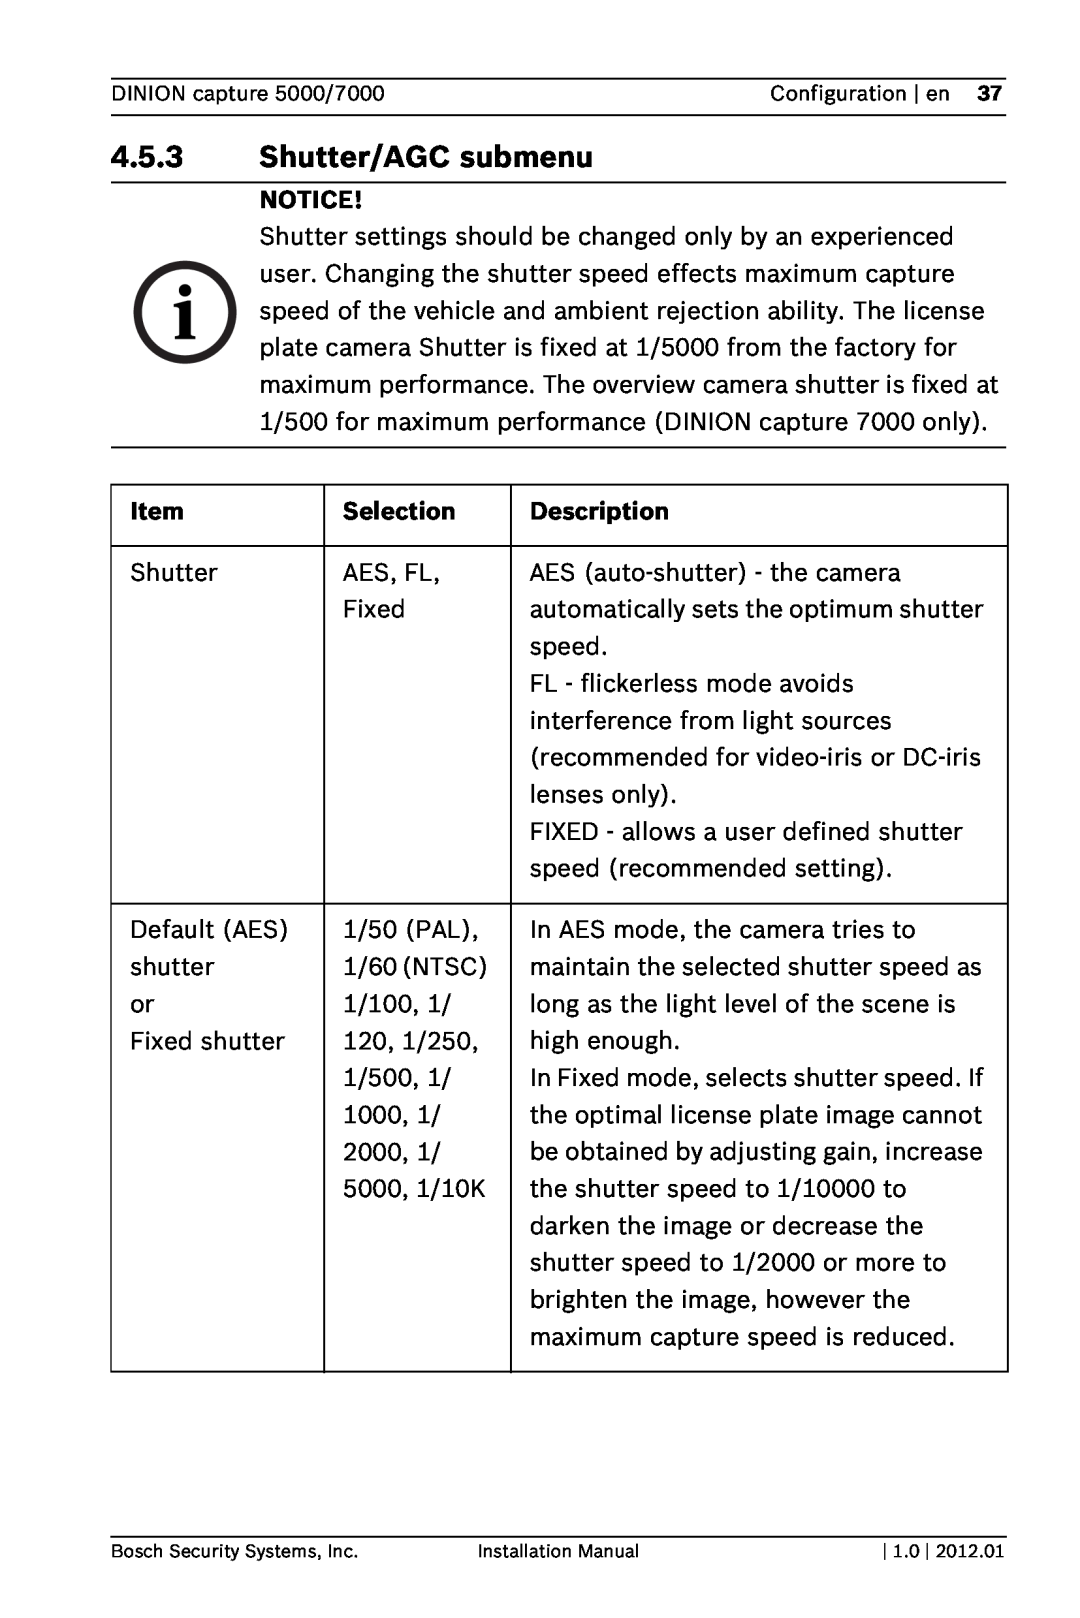 Bosch Appliances 7000, 5000 installation manual 4.5.3Shutter/AGC submenu, Notice, Item, Selection, Description 